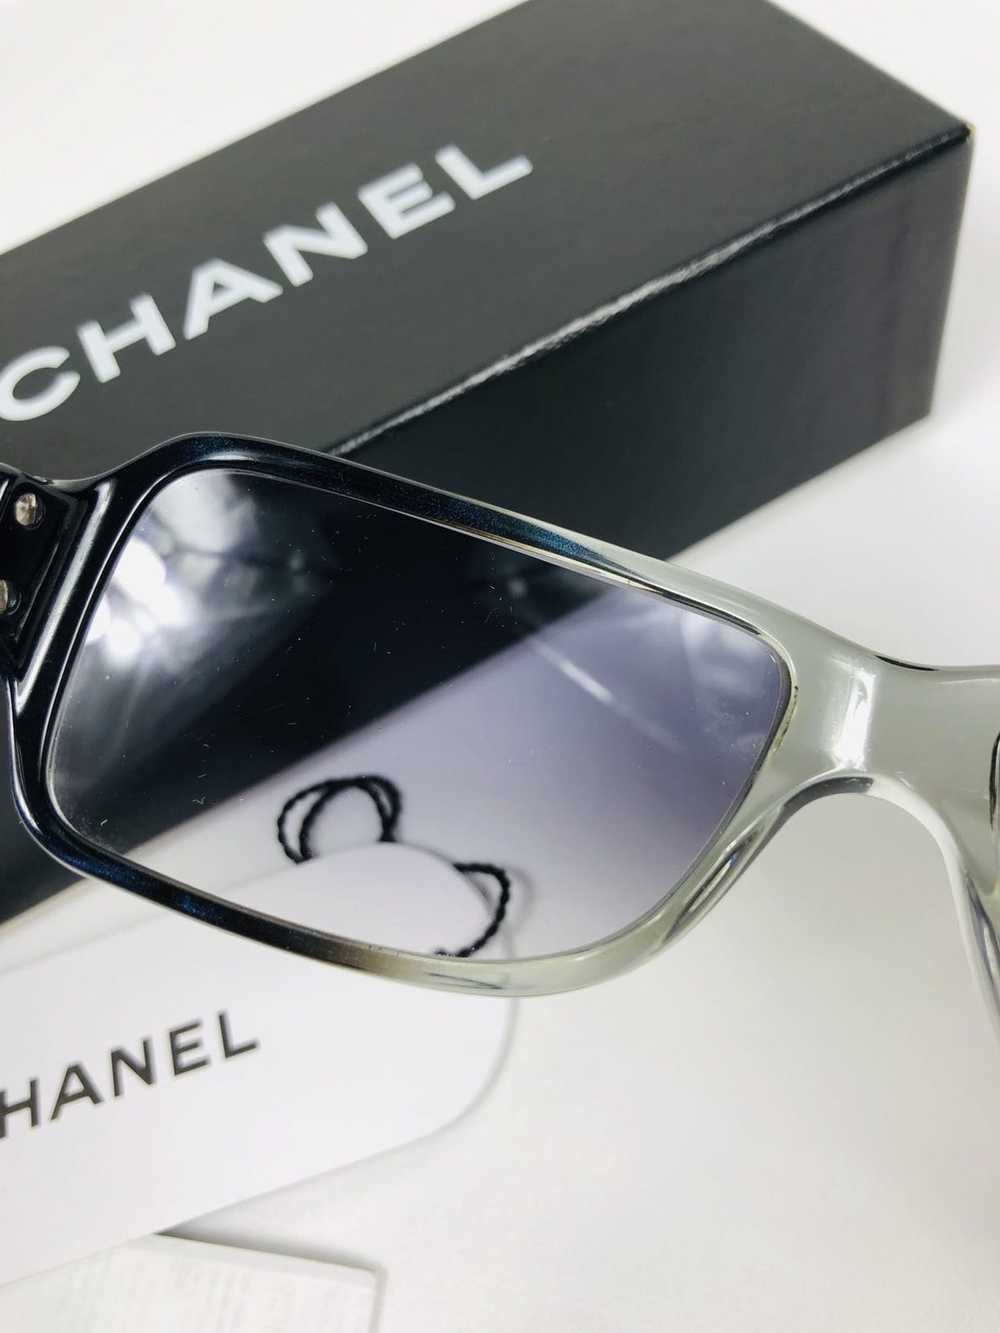 Chanel Chanel cc logo sunglasses - image 7